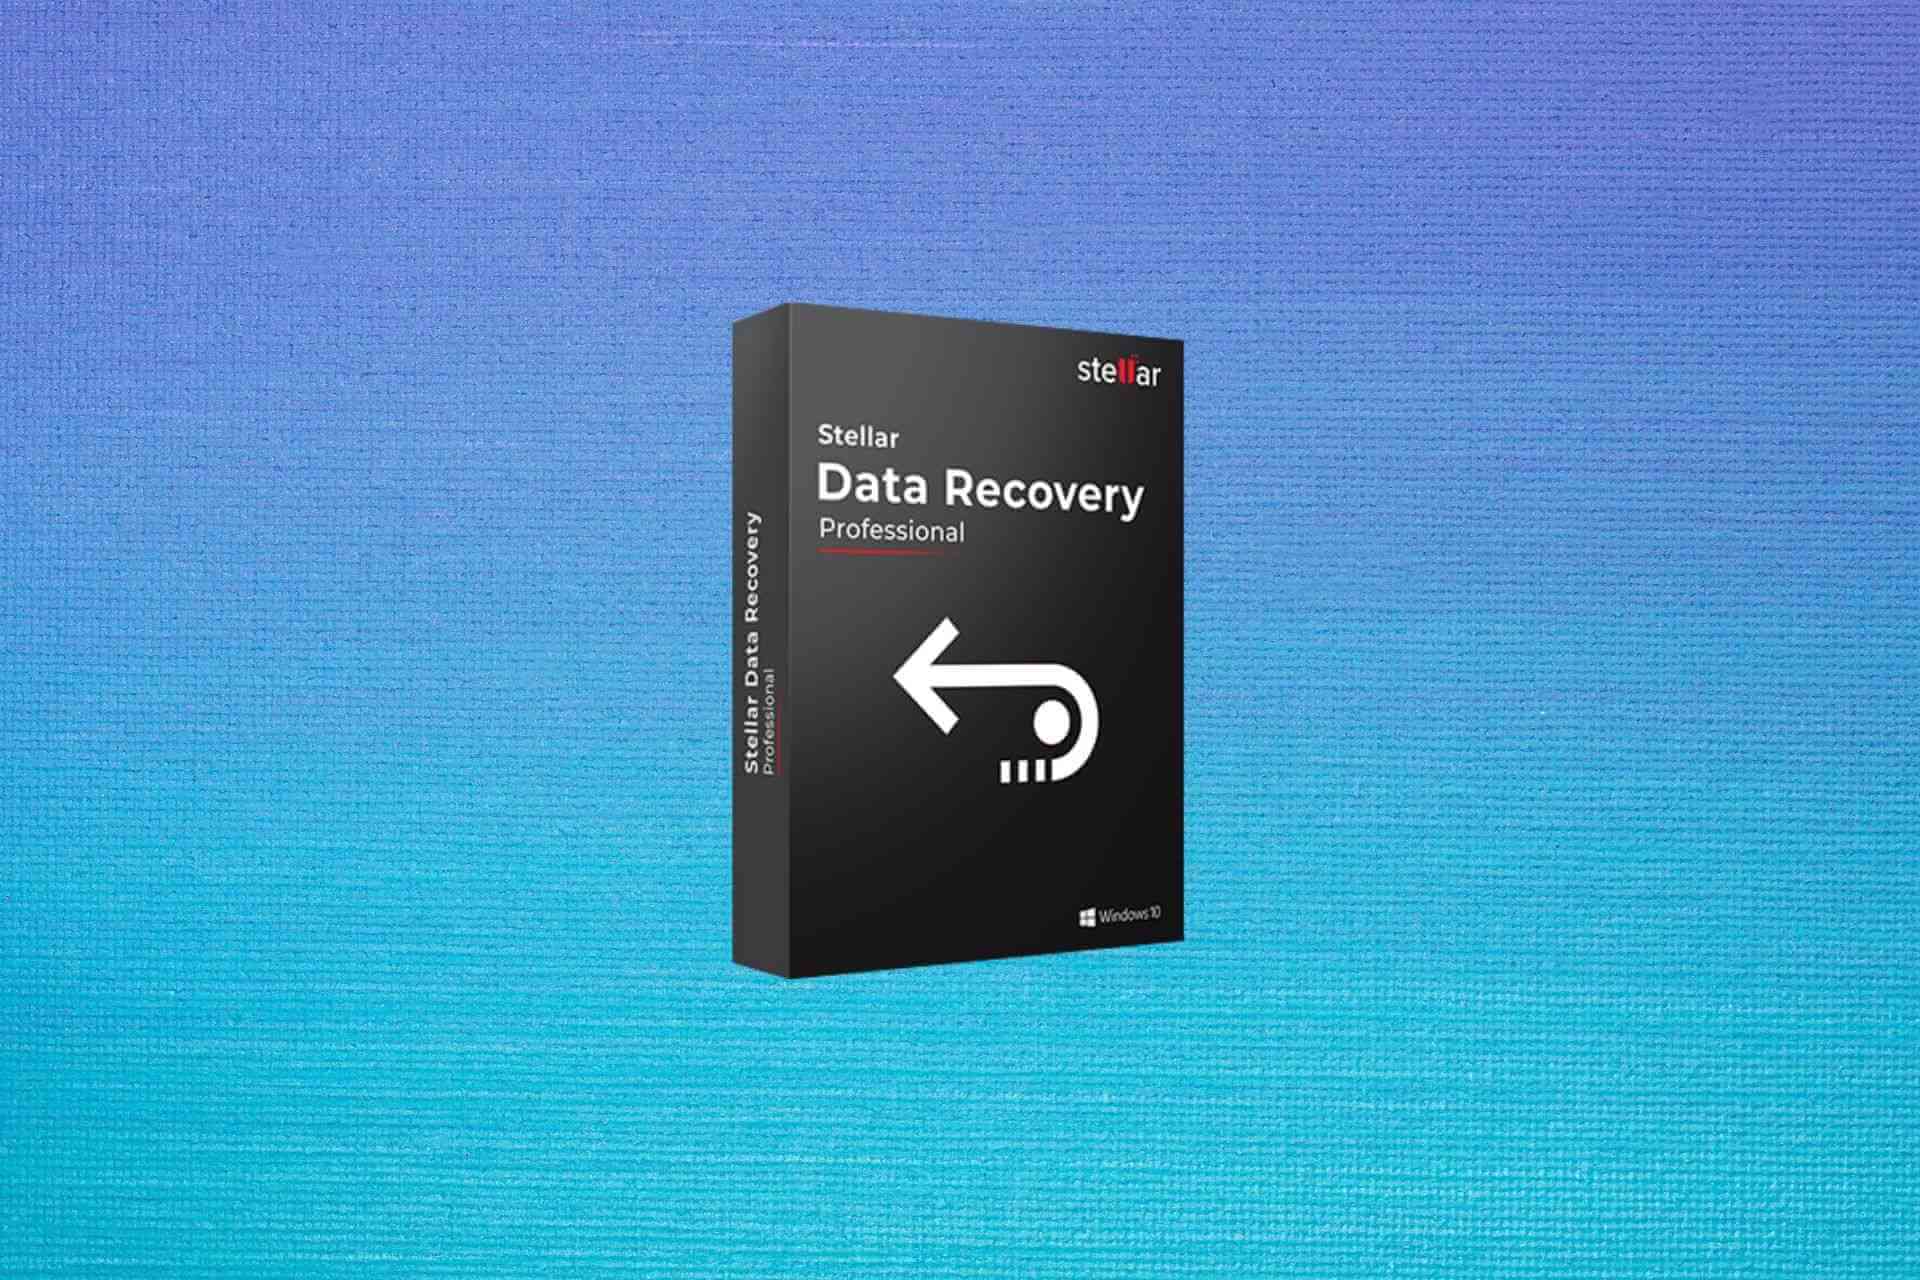 stellar data recovery software